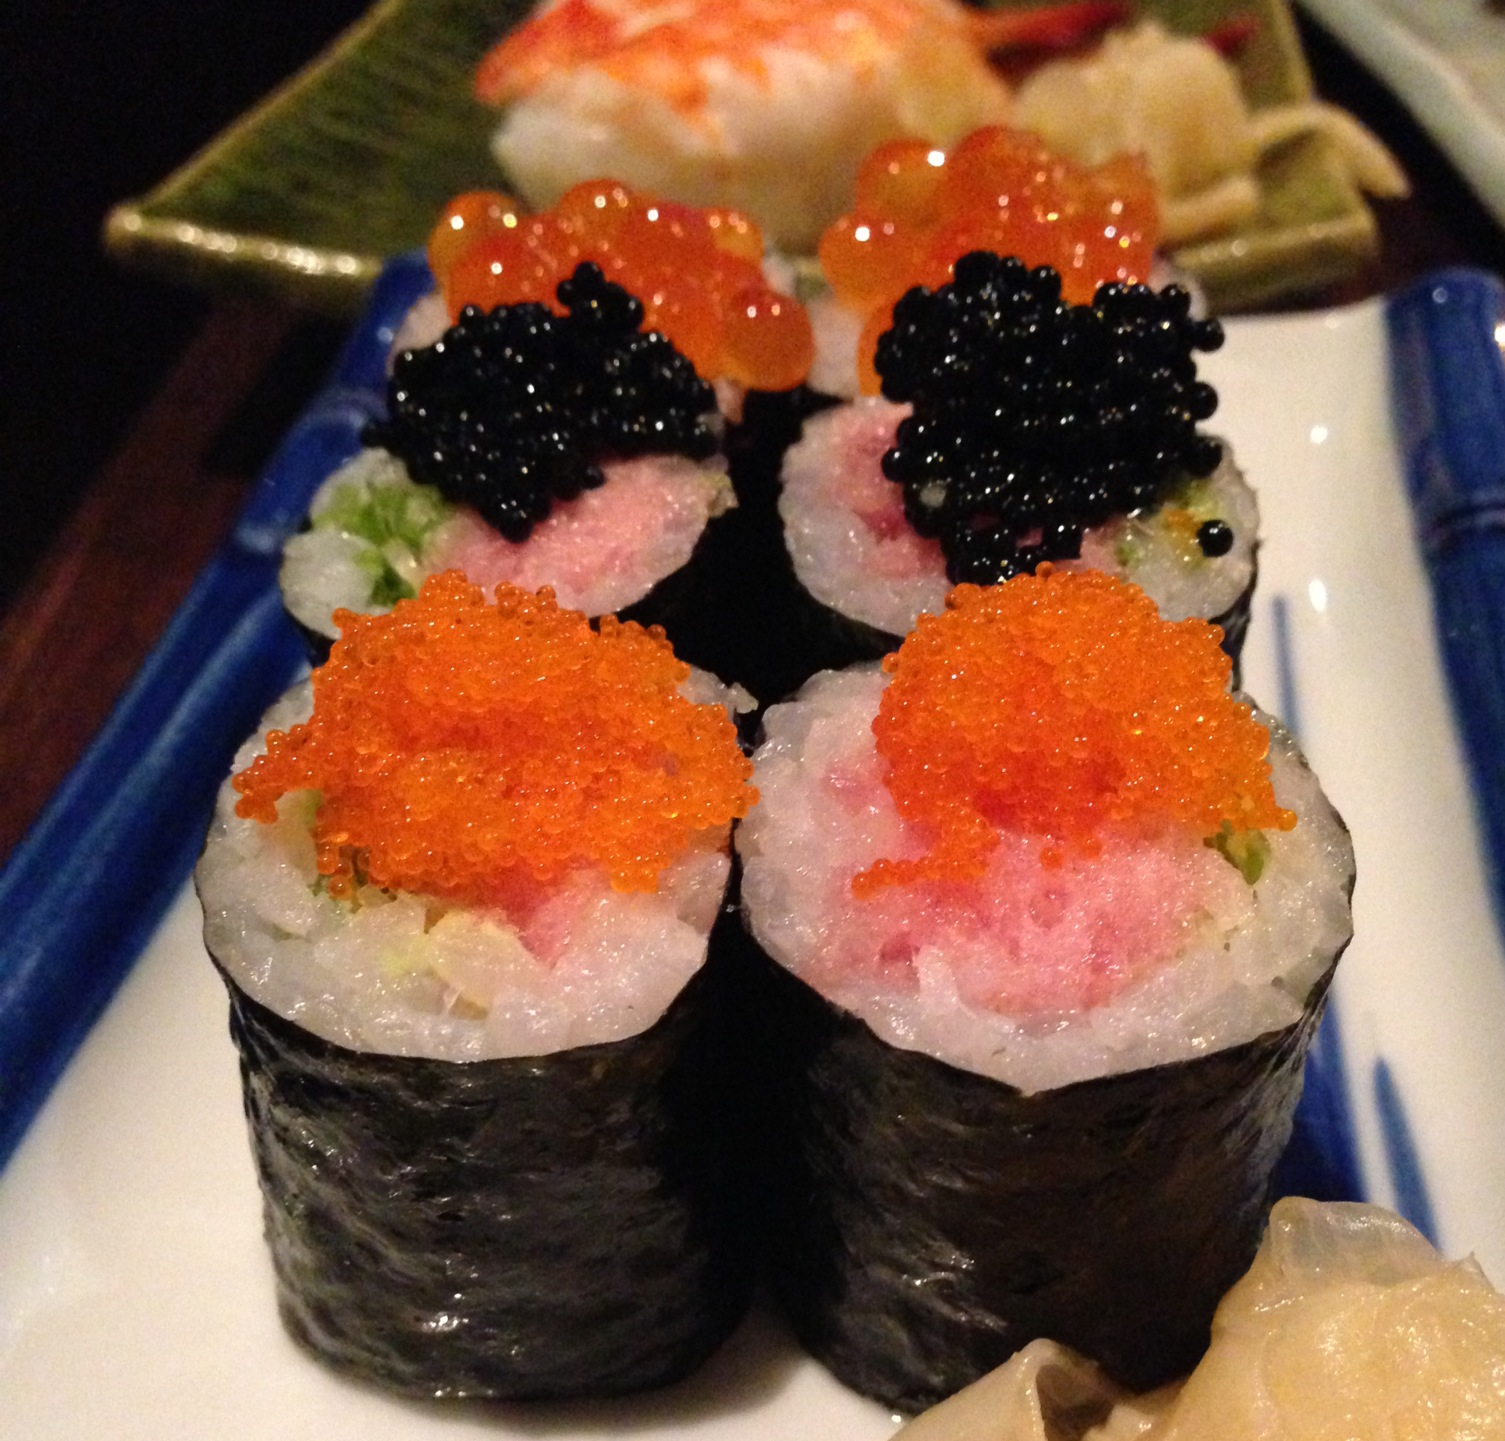 Fatty tuna, scallions, caviar. salmon and masago to TOP it off!